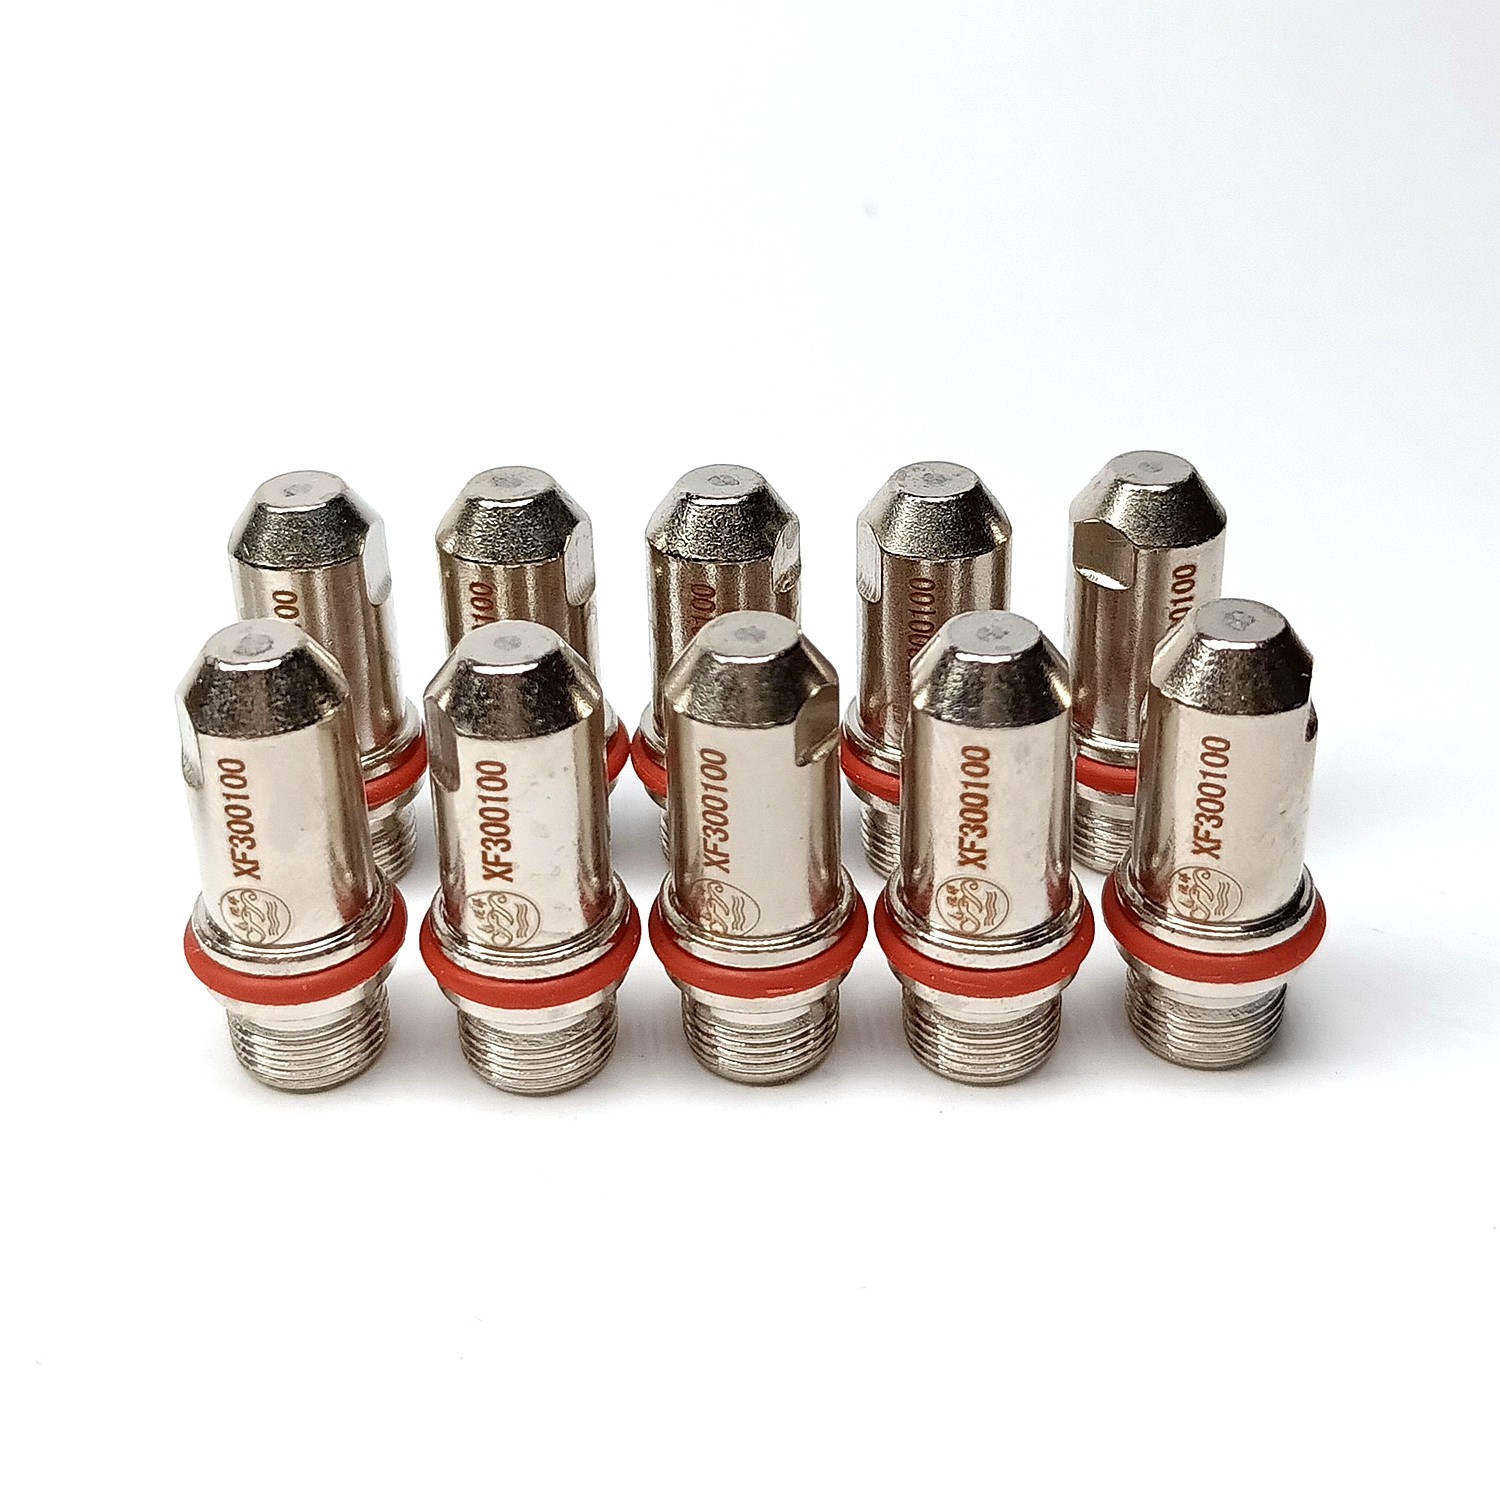 FY-XF300 XF300 XF-300 LGK-300 XF 300100 300150 300170 300190 300210 CNC Huayuan 300A Plasma Cutter Torch Electrode Nozzle Tip